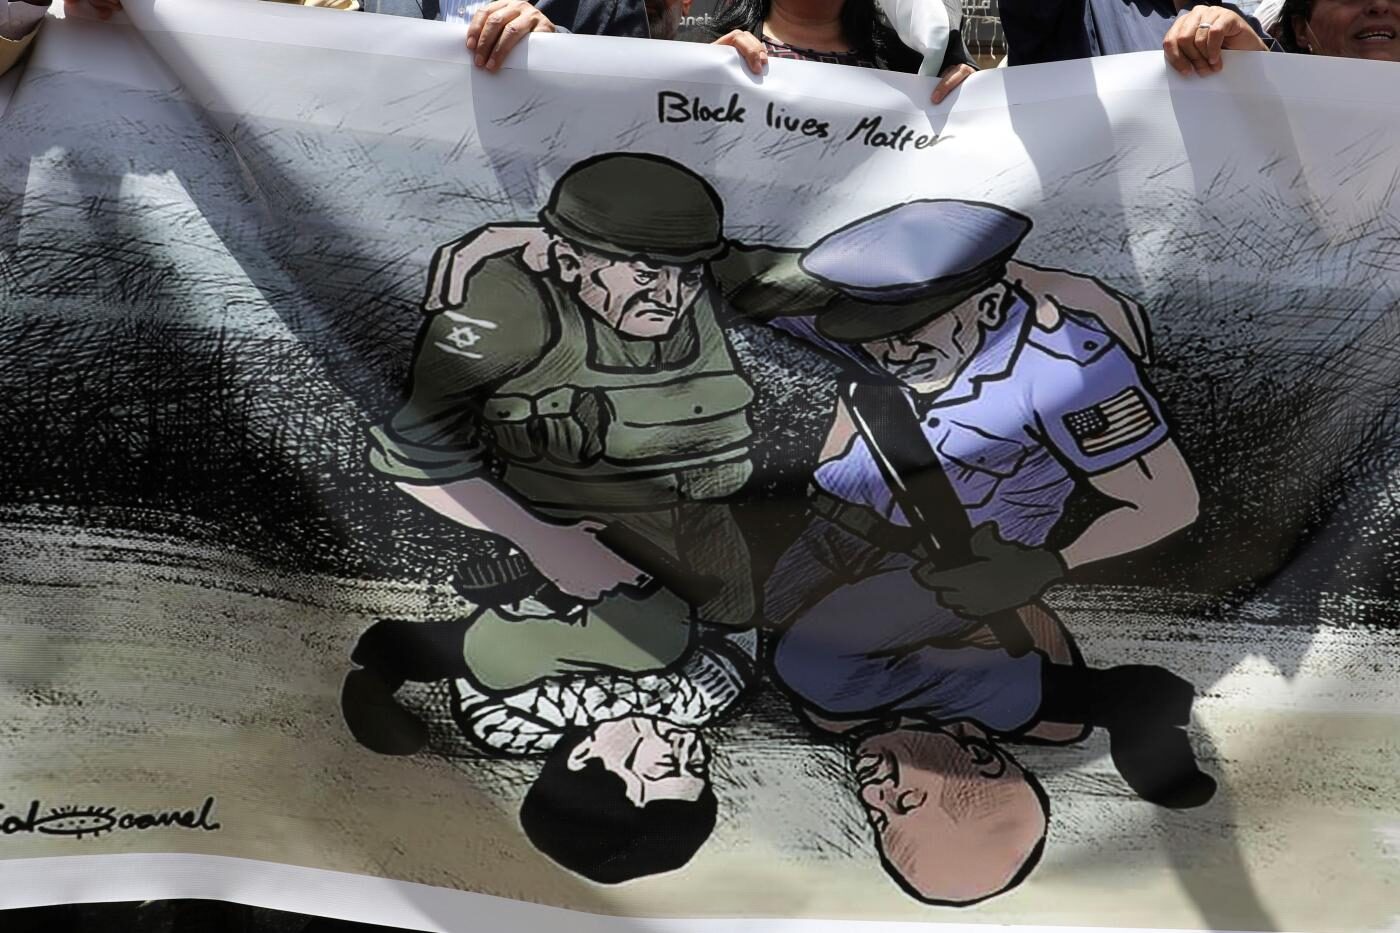 Israel US american police knee on neck